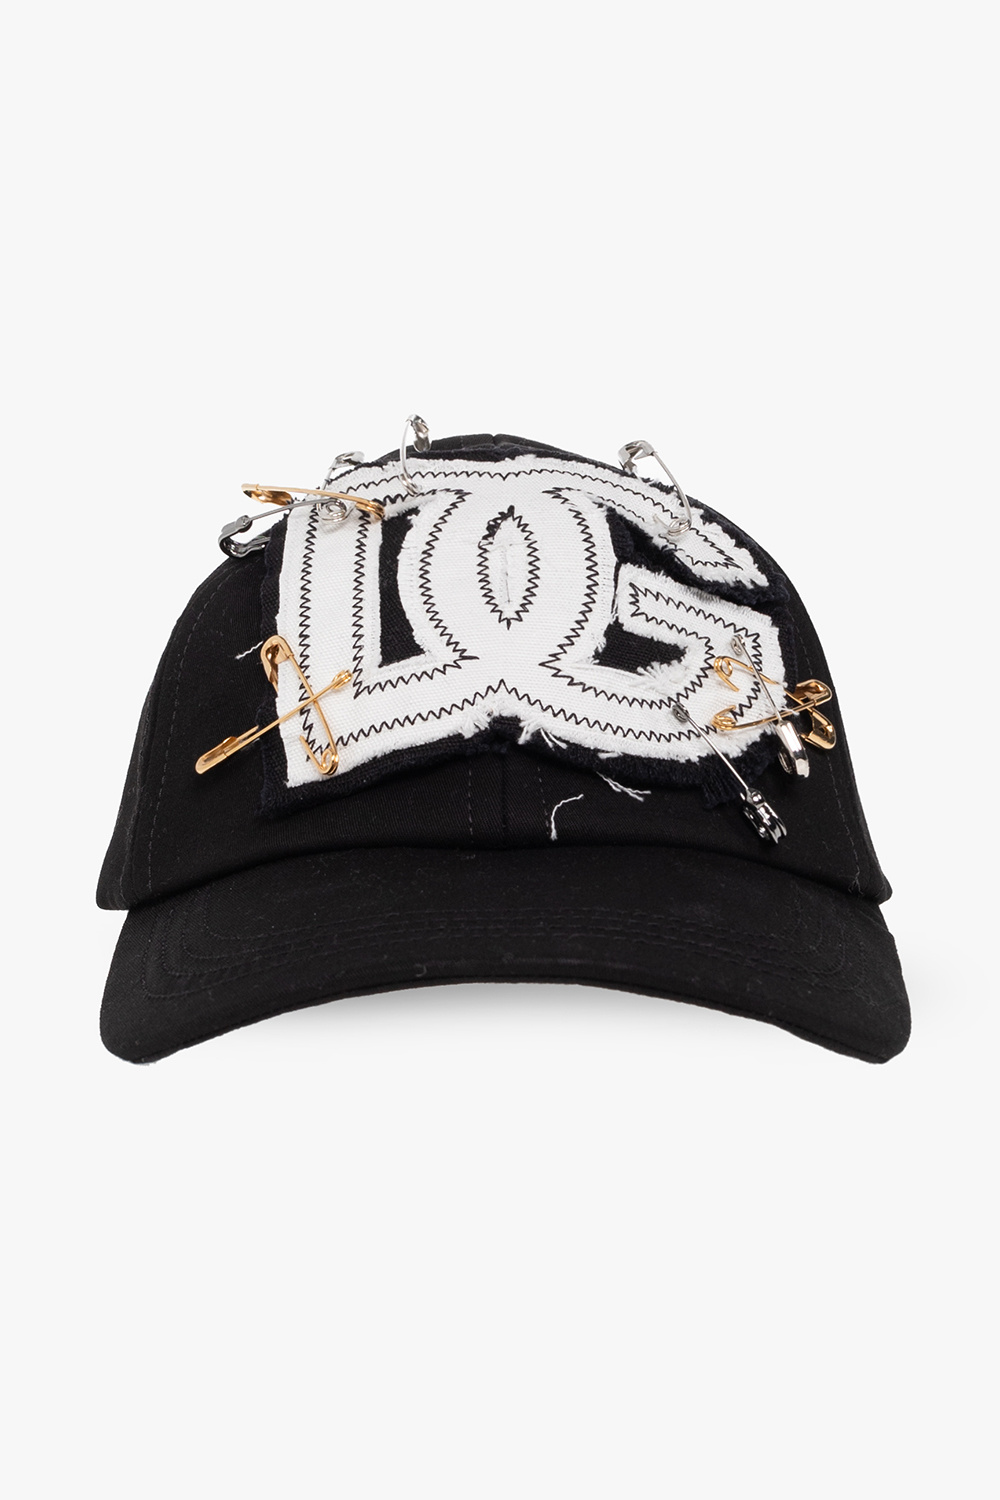 Dolce & Gabbana Baseball cap | Dolce & Gabbana logo-embroidered balconette  bra Braun | Men's Accessories | StclaircomoShops